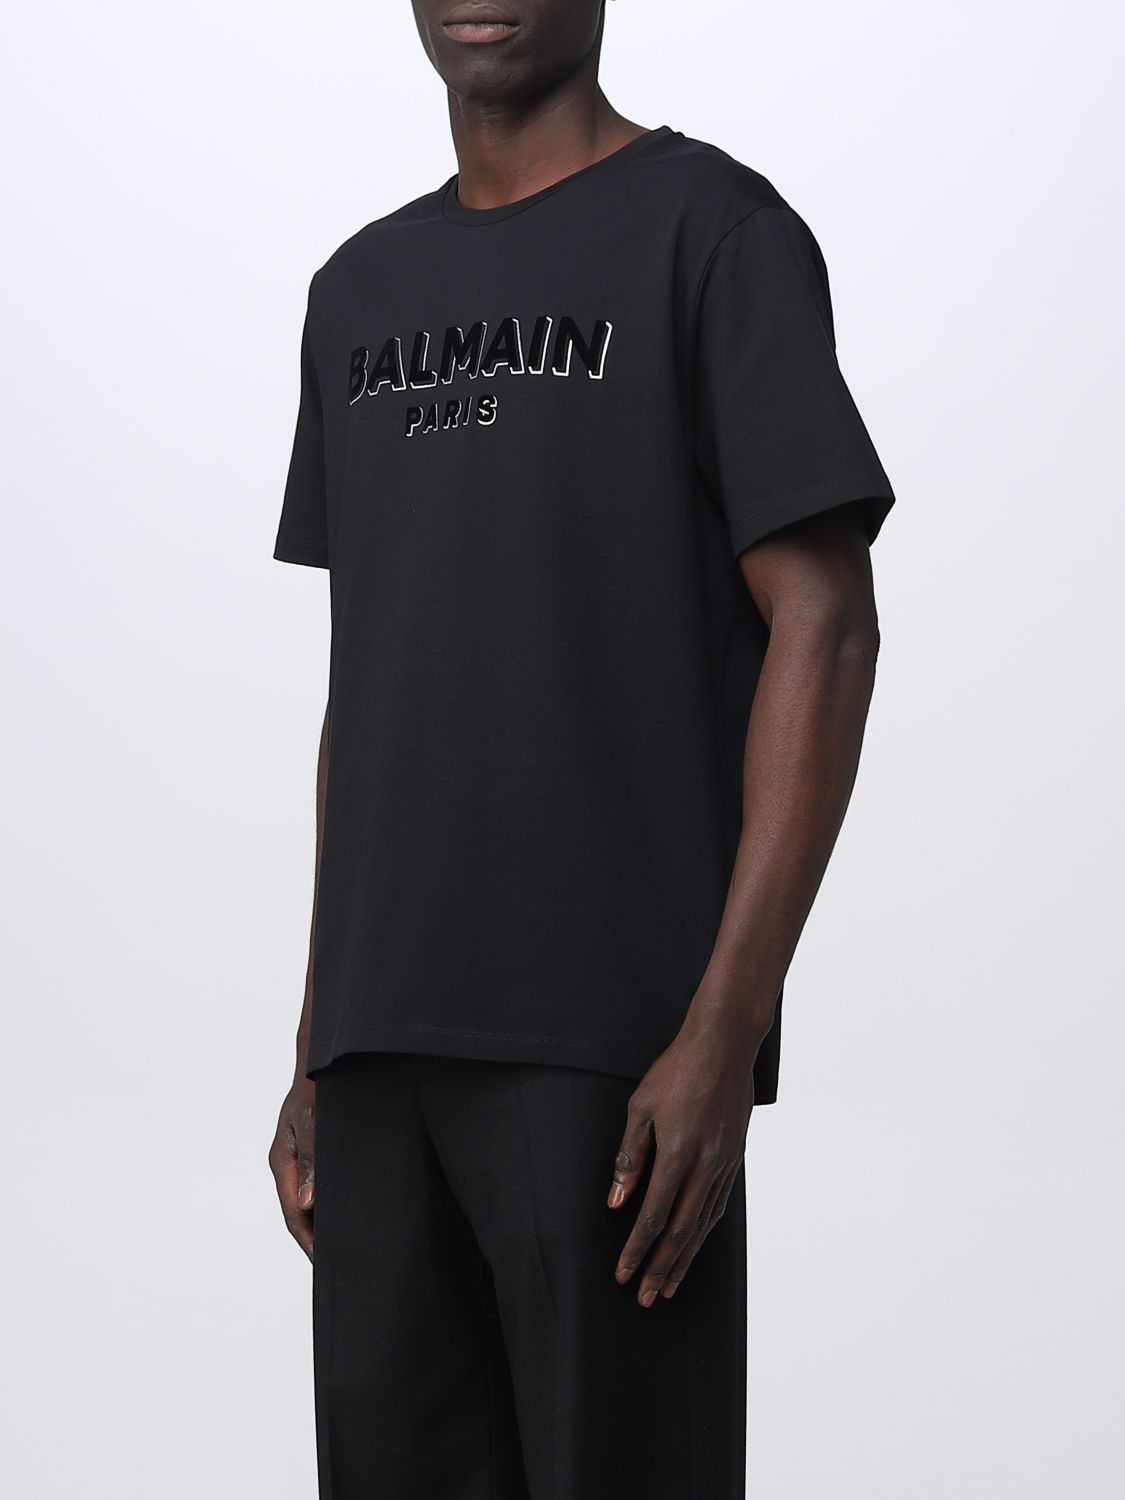 BALMAIN: t-shirt - Black 1 t-shirt online on GIGLIO.COM